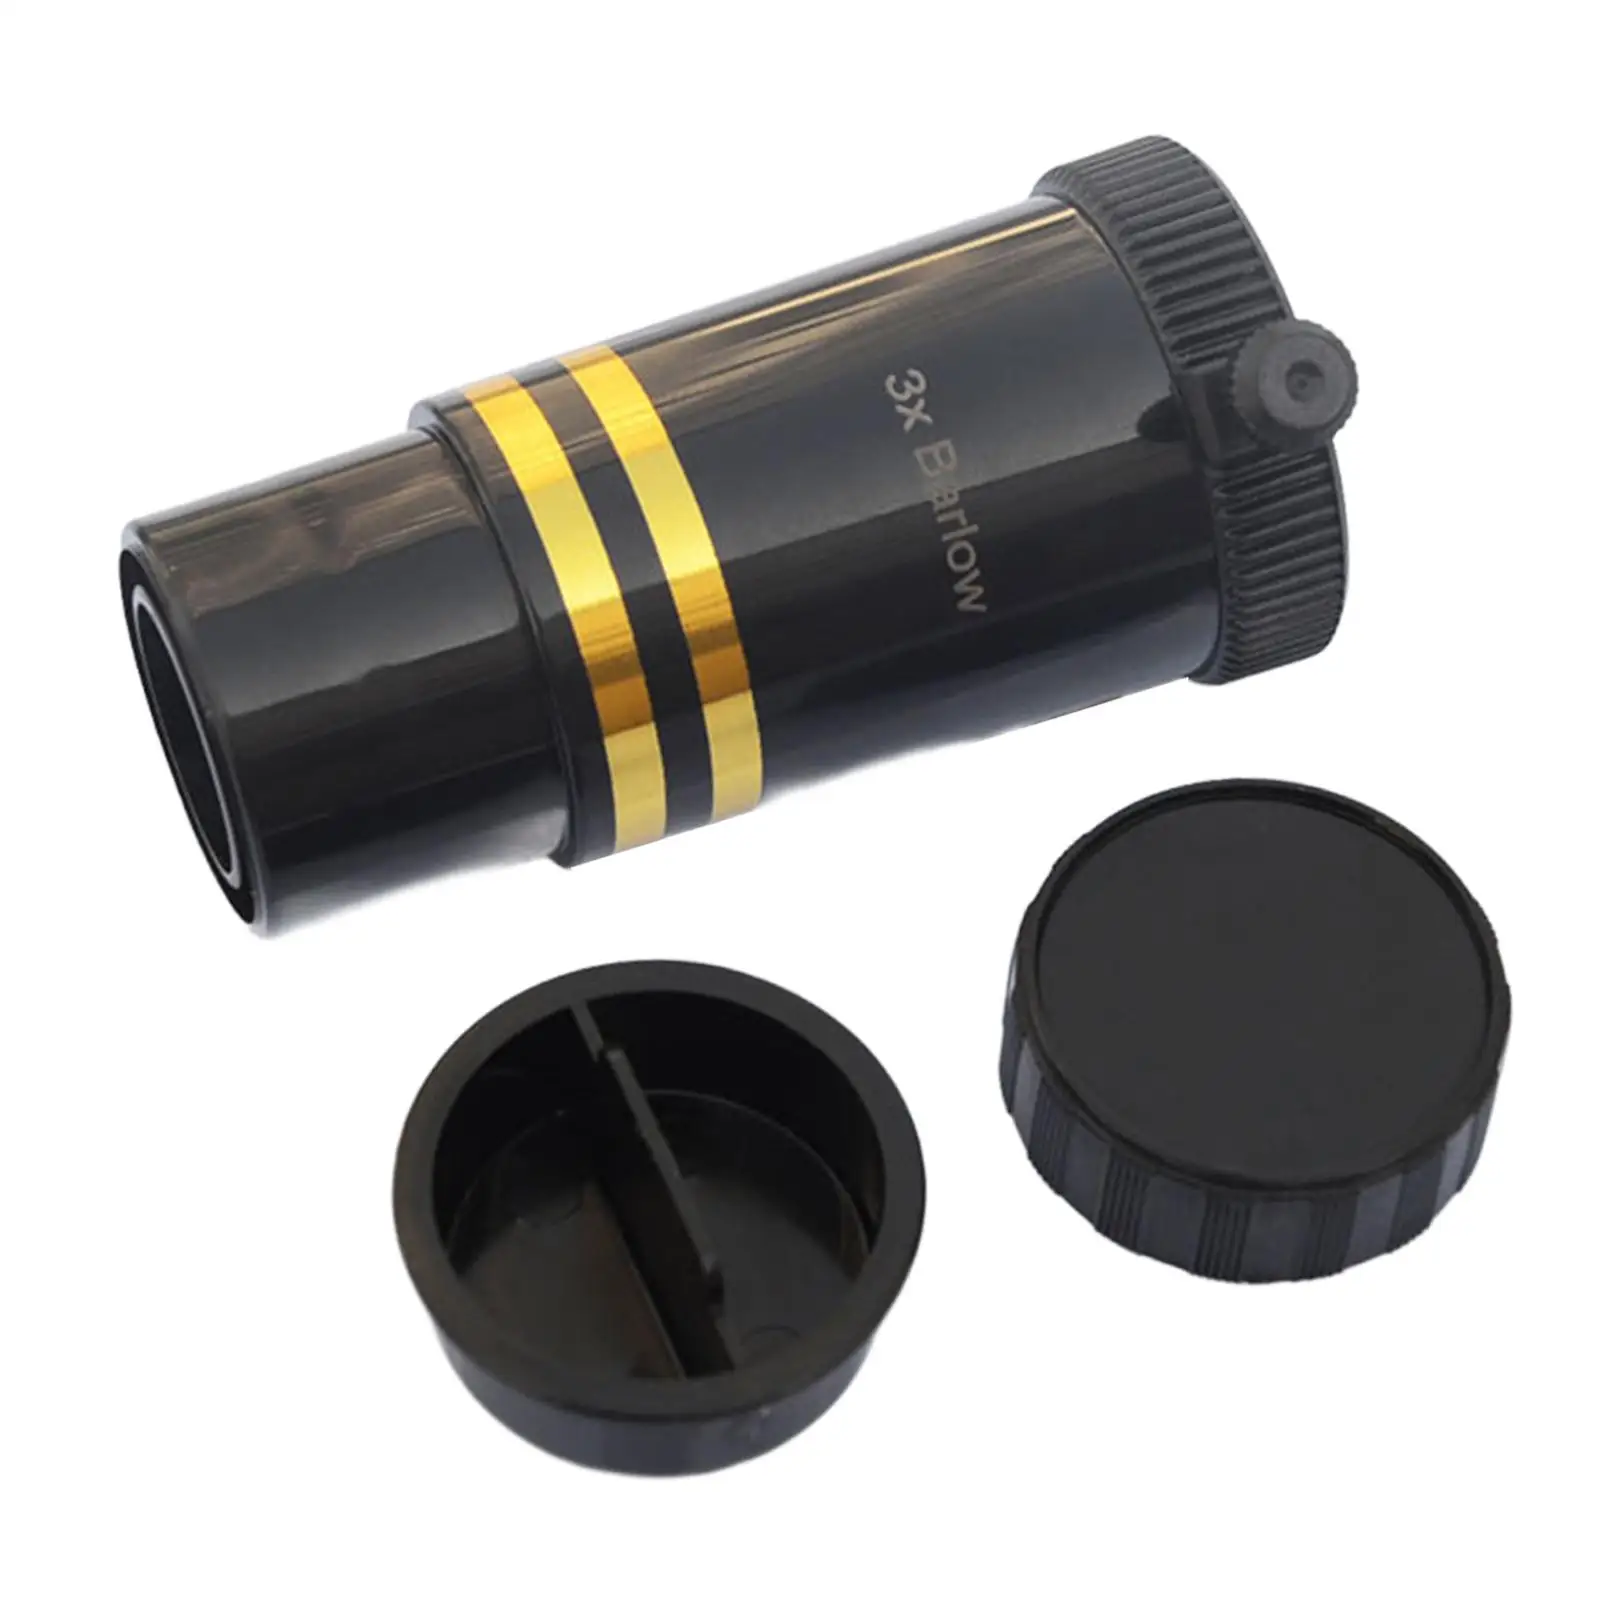 3x Barlow Lens Achromatic Barlow Lens Fully Multi Coated 1.25